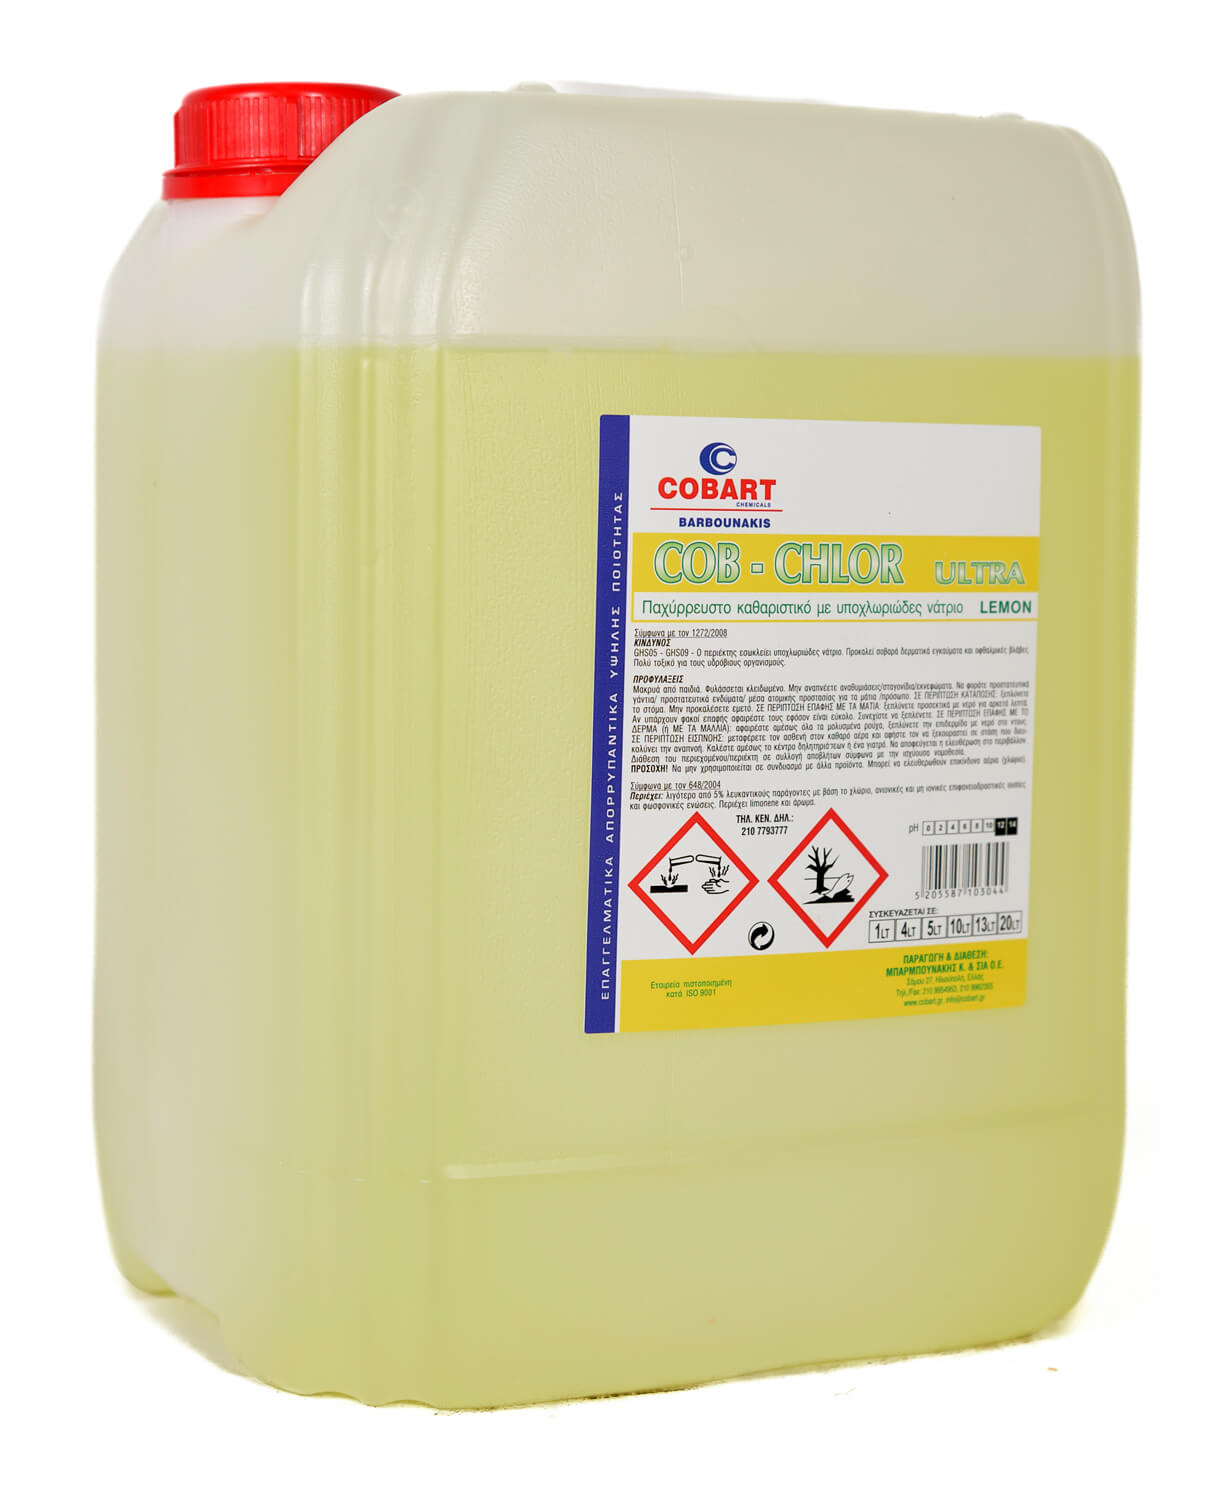 COB - CHLOR ULTRA χλώριο παχύρρευστο με άρωμα λεμόνι, 10lt